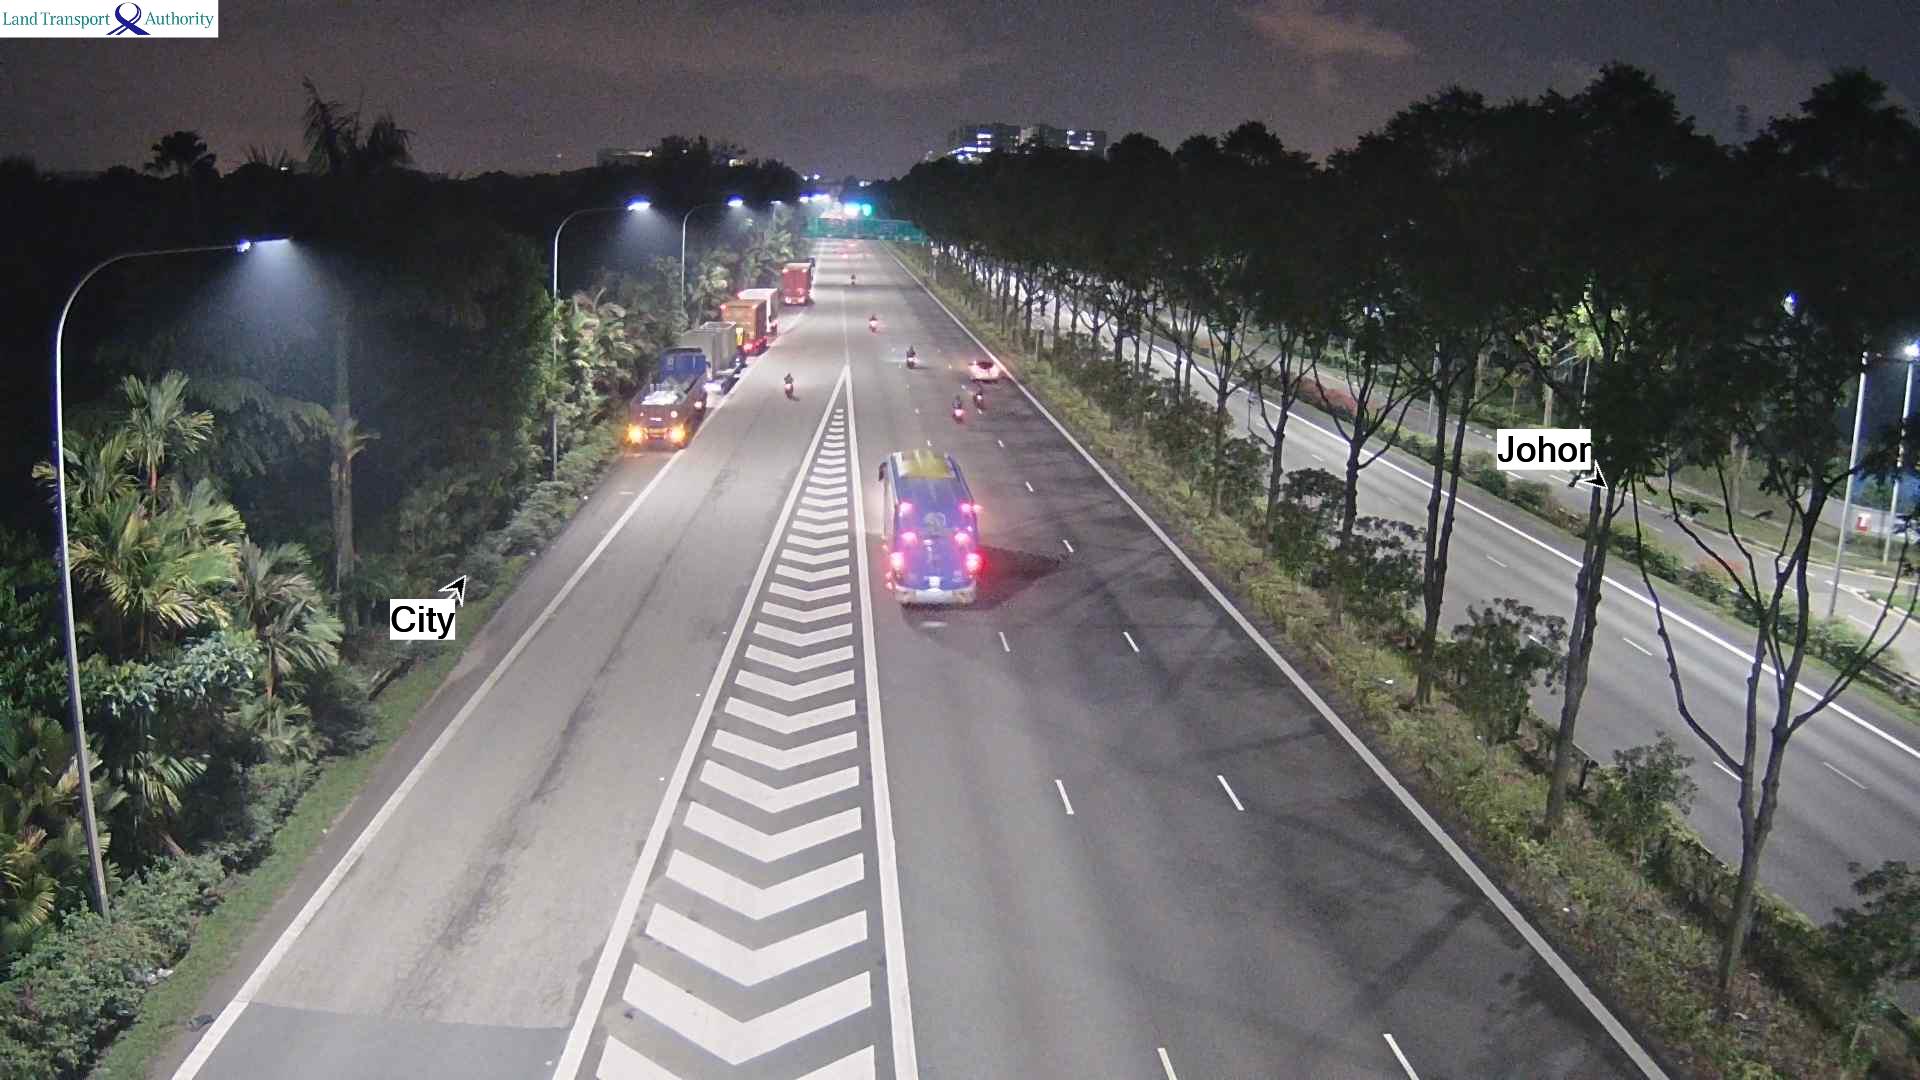 View from Entrance from Jln Ahmad Ibrahim - Ayer Rajah Expressway (AYE) - Singapore